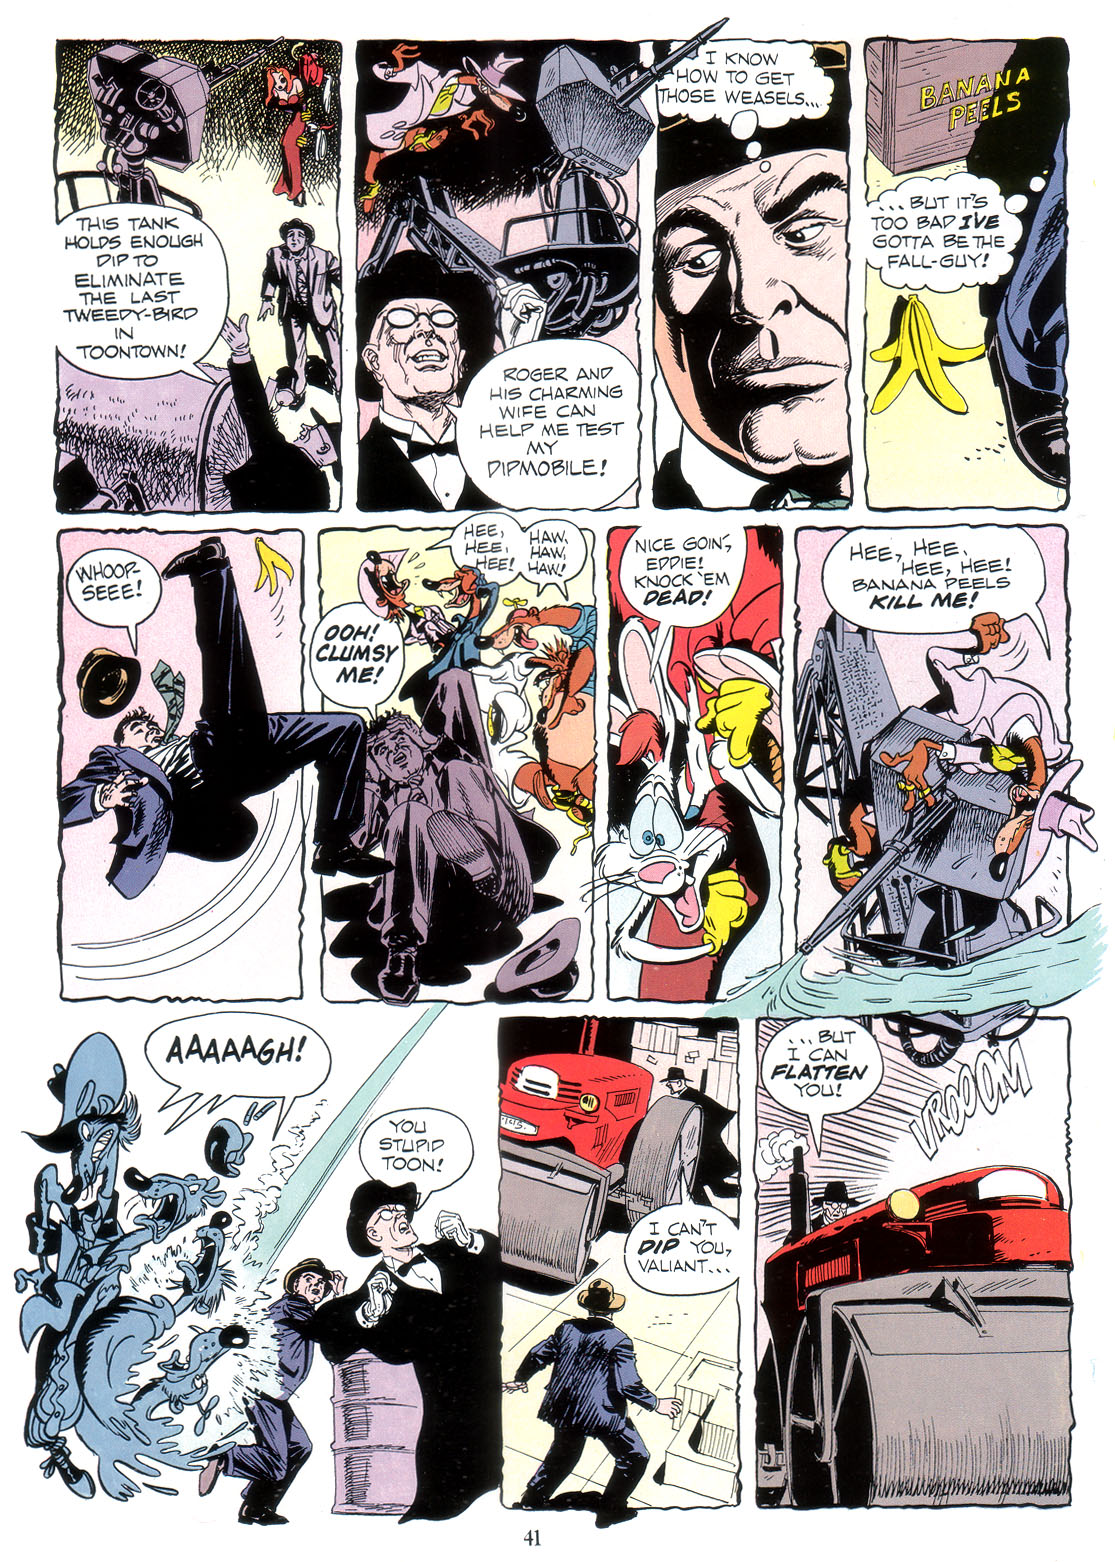 Marvel Graphic Novel issue 41 - Who Framed Roger Rabbit - Page 43